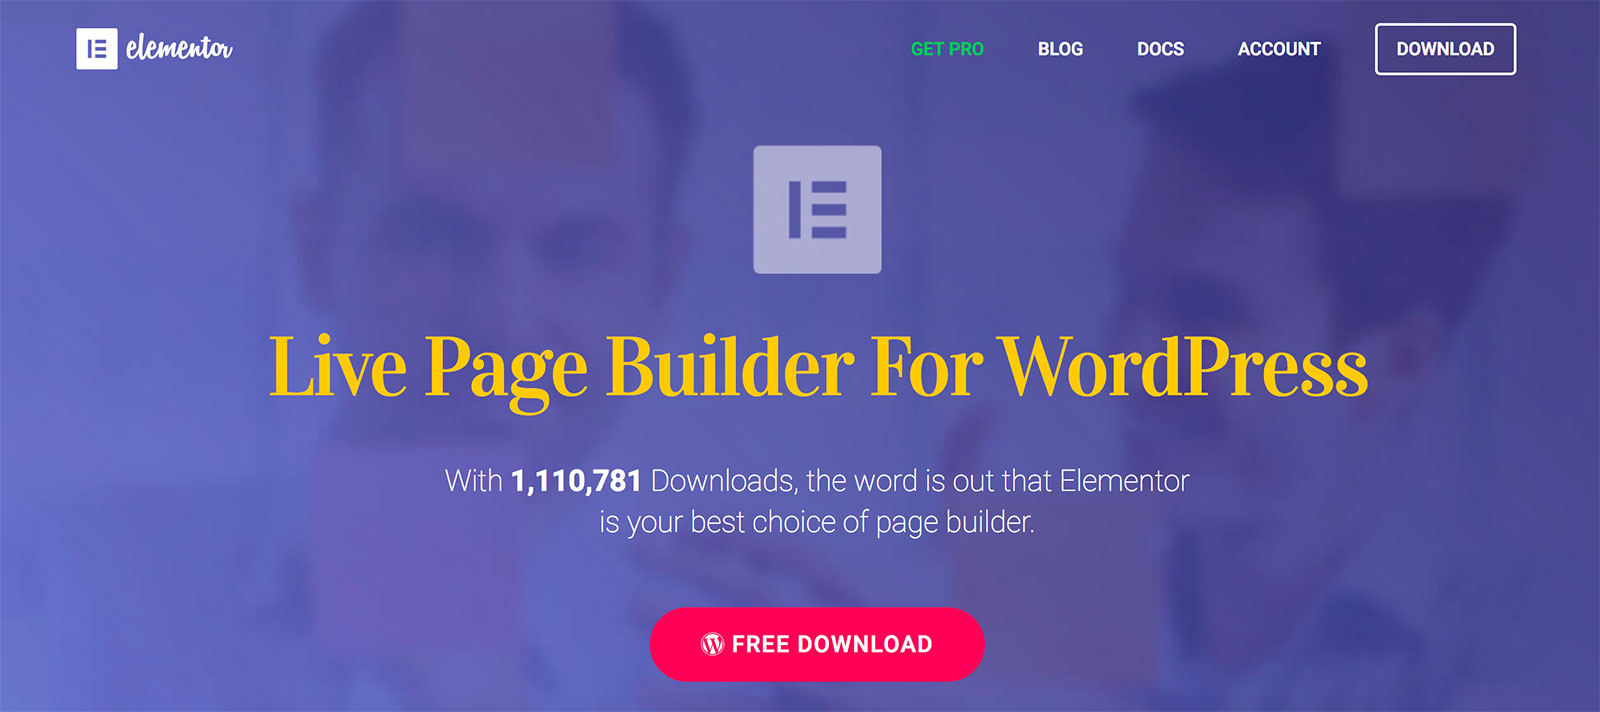 Elementor - WordPress page builder - Review